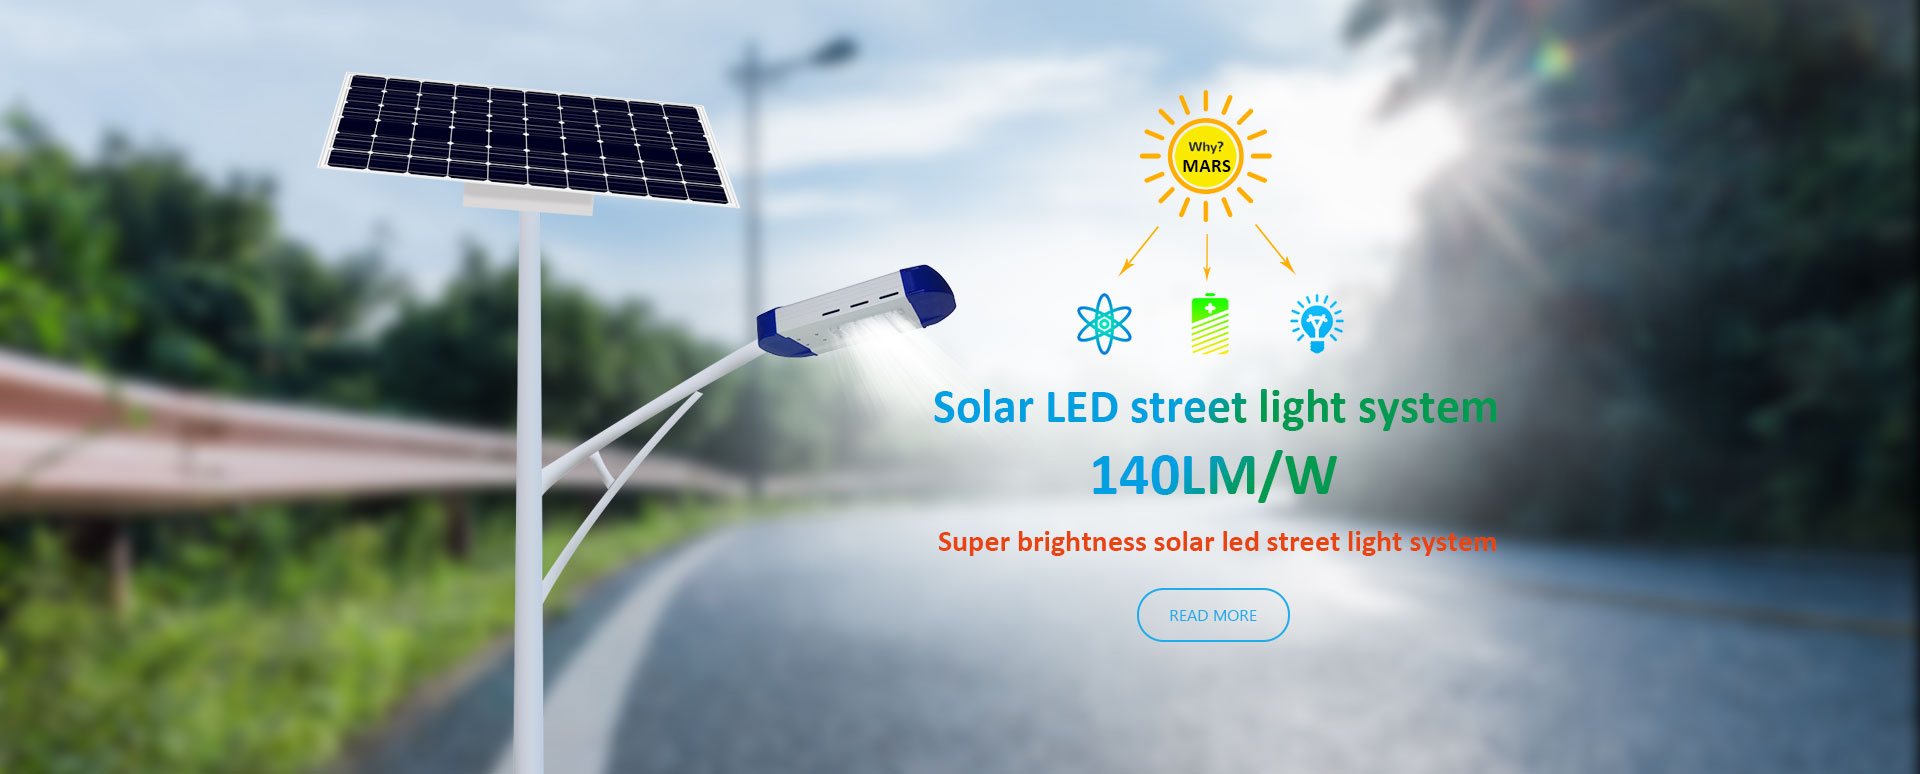 Led Solar Street Lighting System Price List